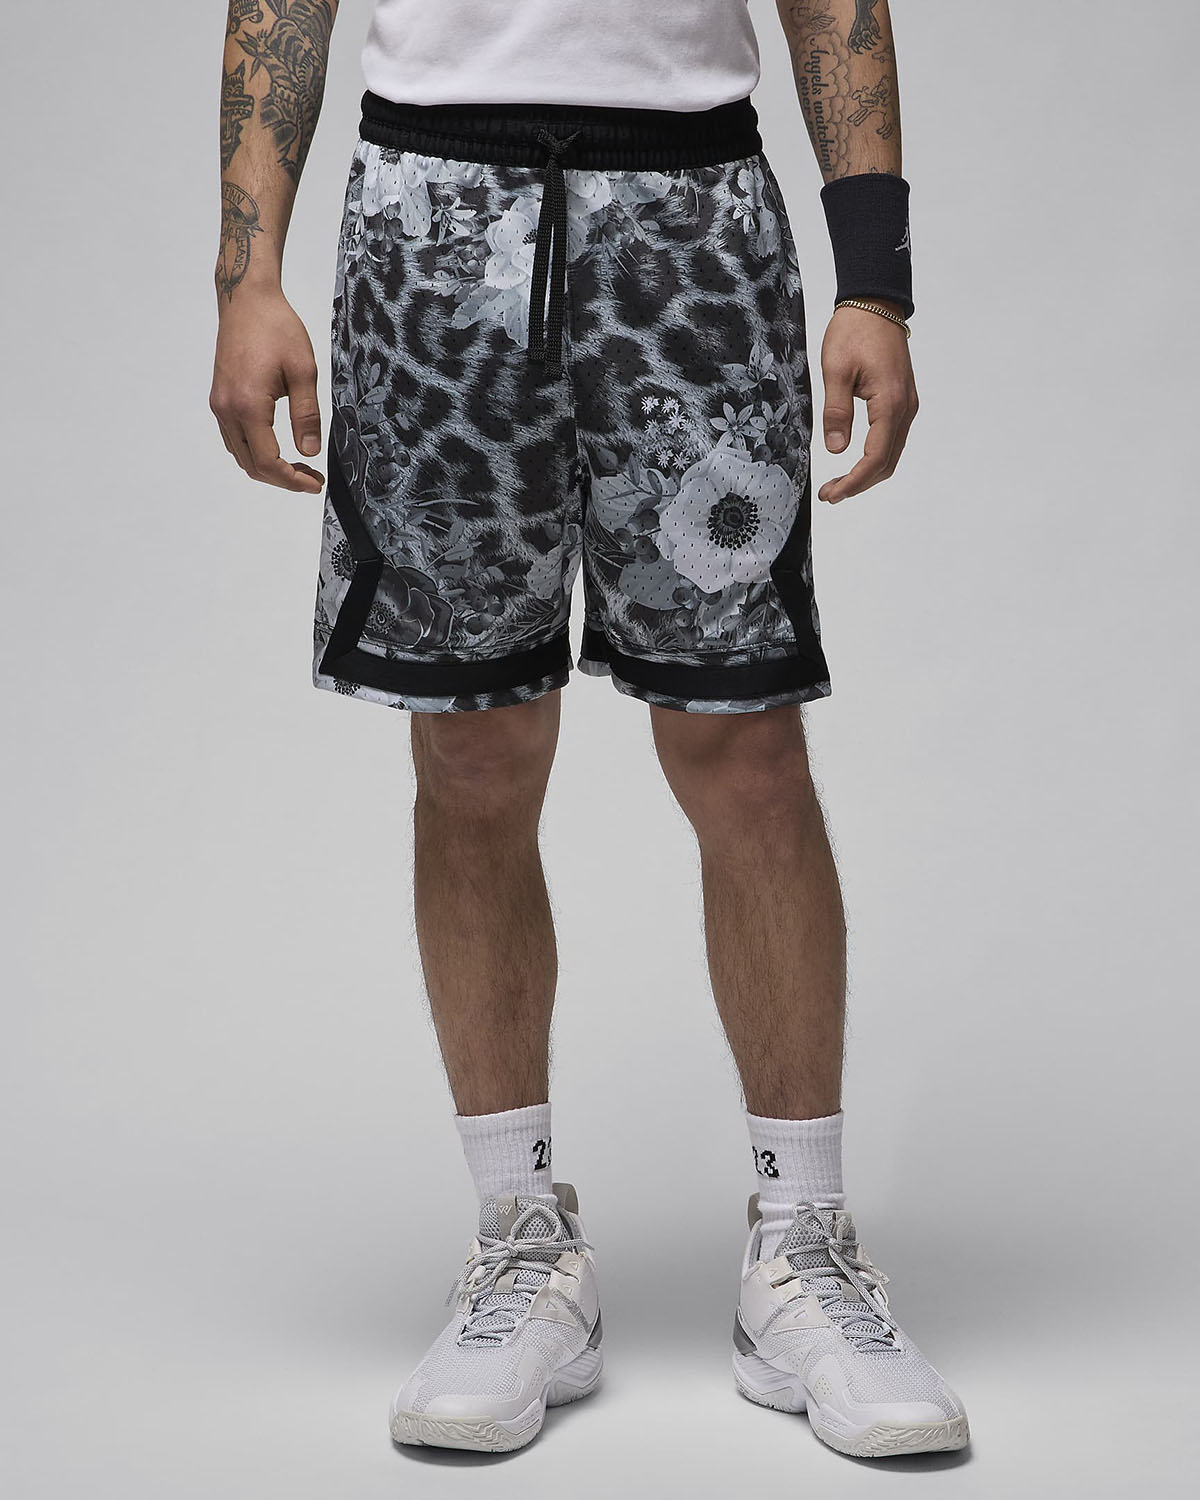 jordan Vnds Sport Allover Print Diamond Shorts Black White 1